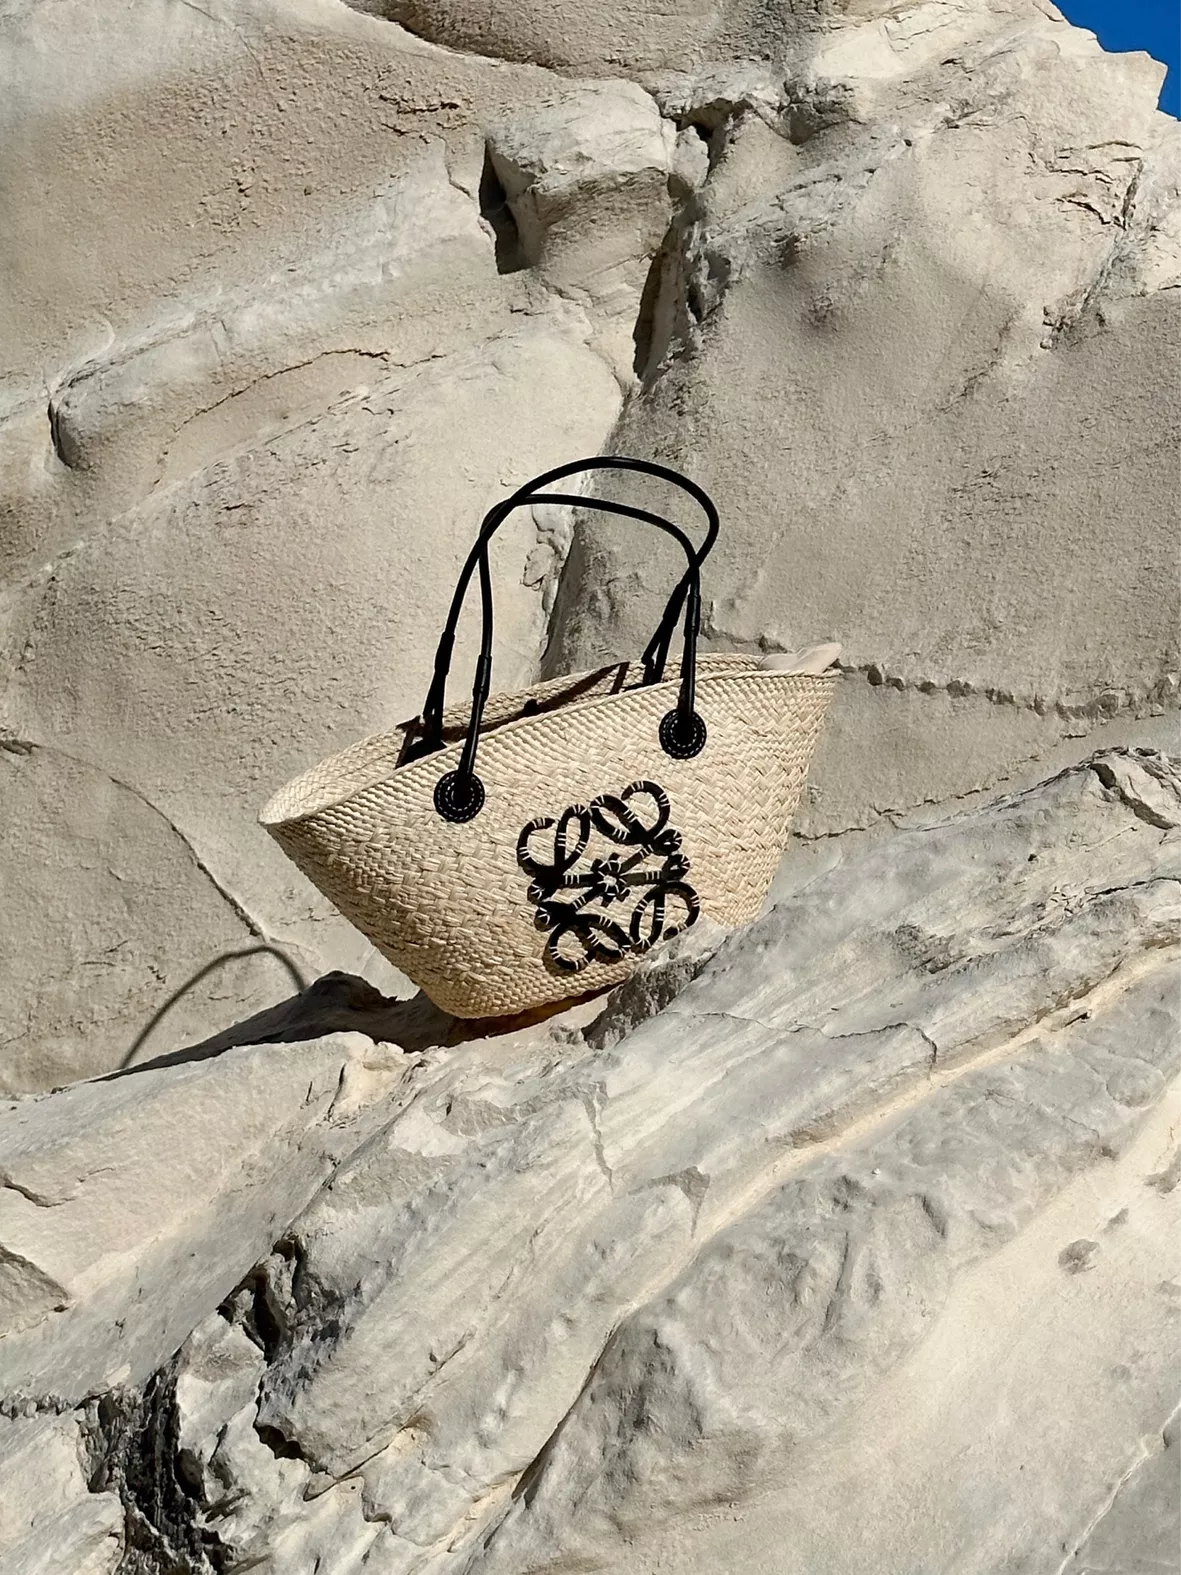 Paula's Ibiza Anagram basket bag curated on LTK